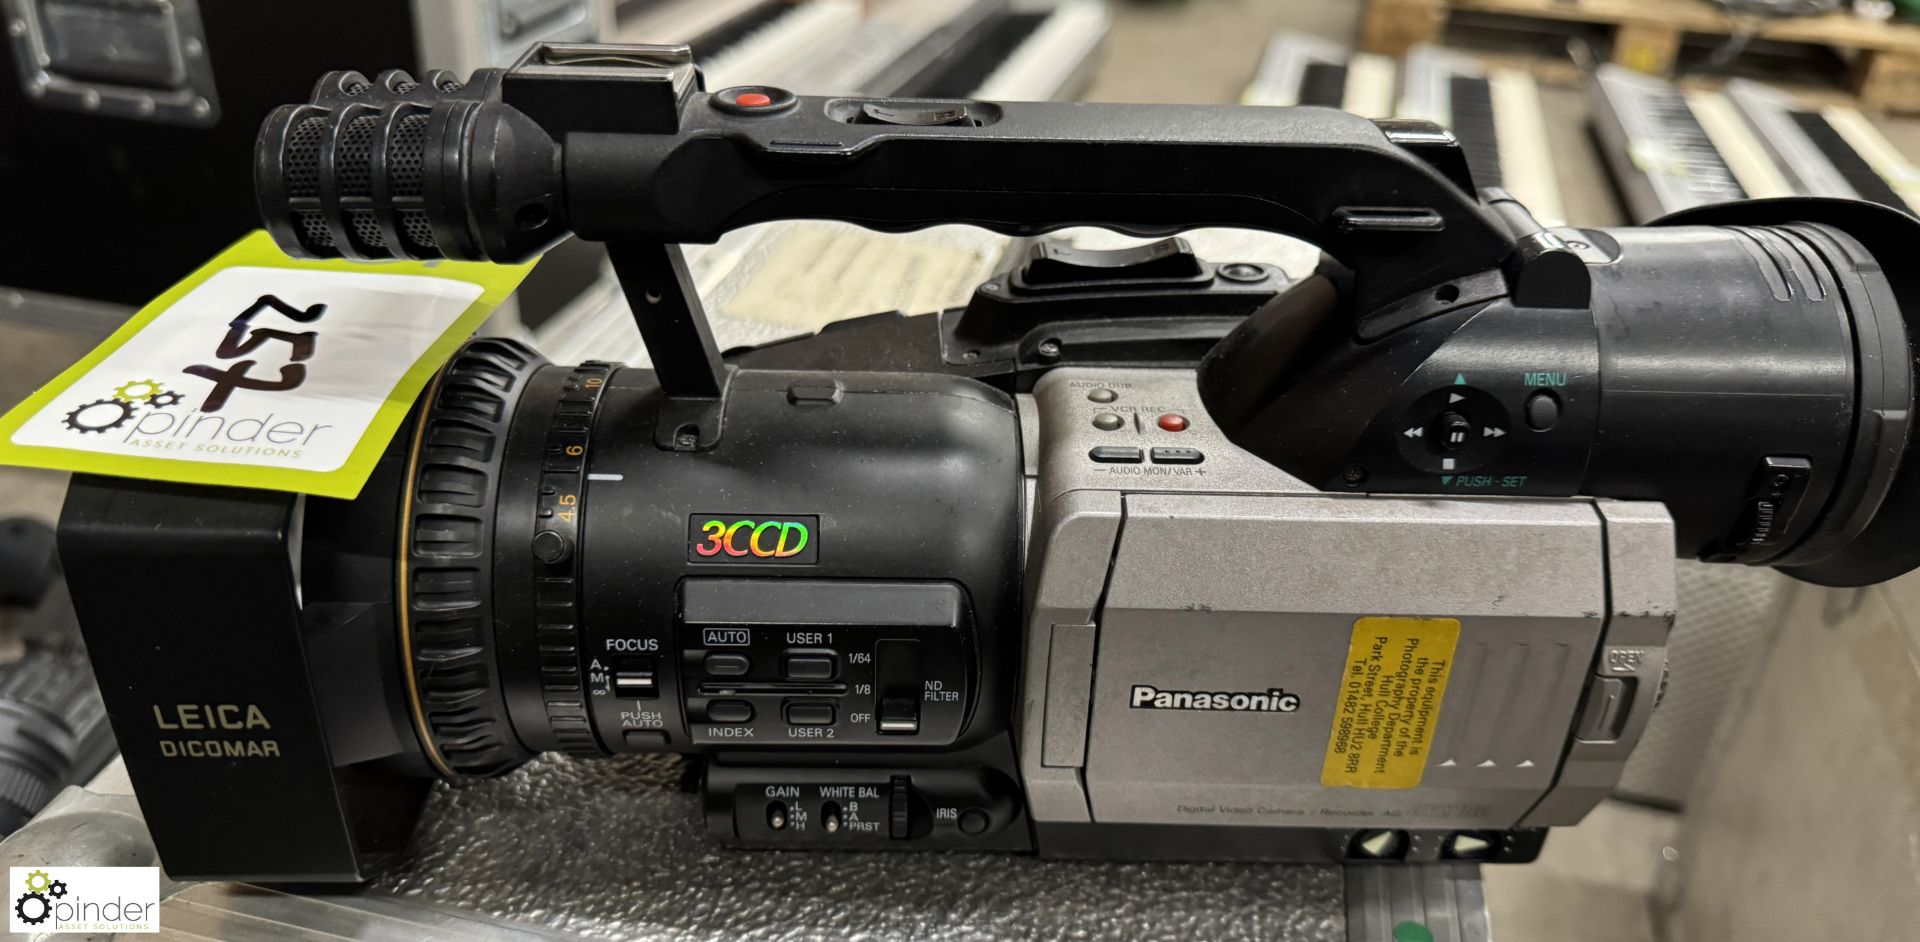 Panasonic AG-DUV100A Camera Recorder, with Leica Dicomar lens - Image 2 of 4